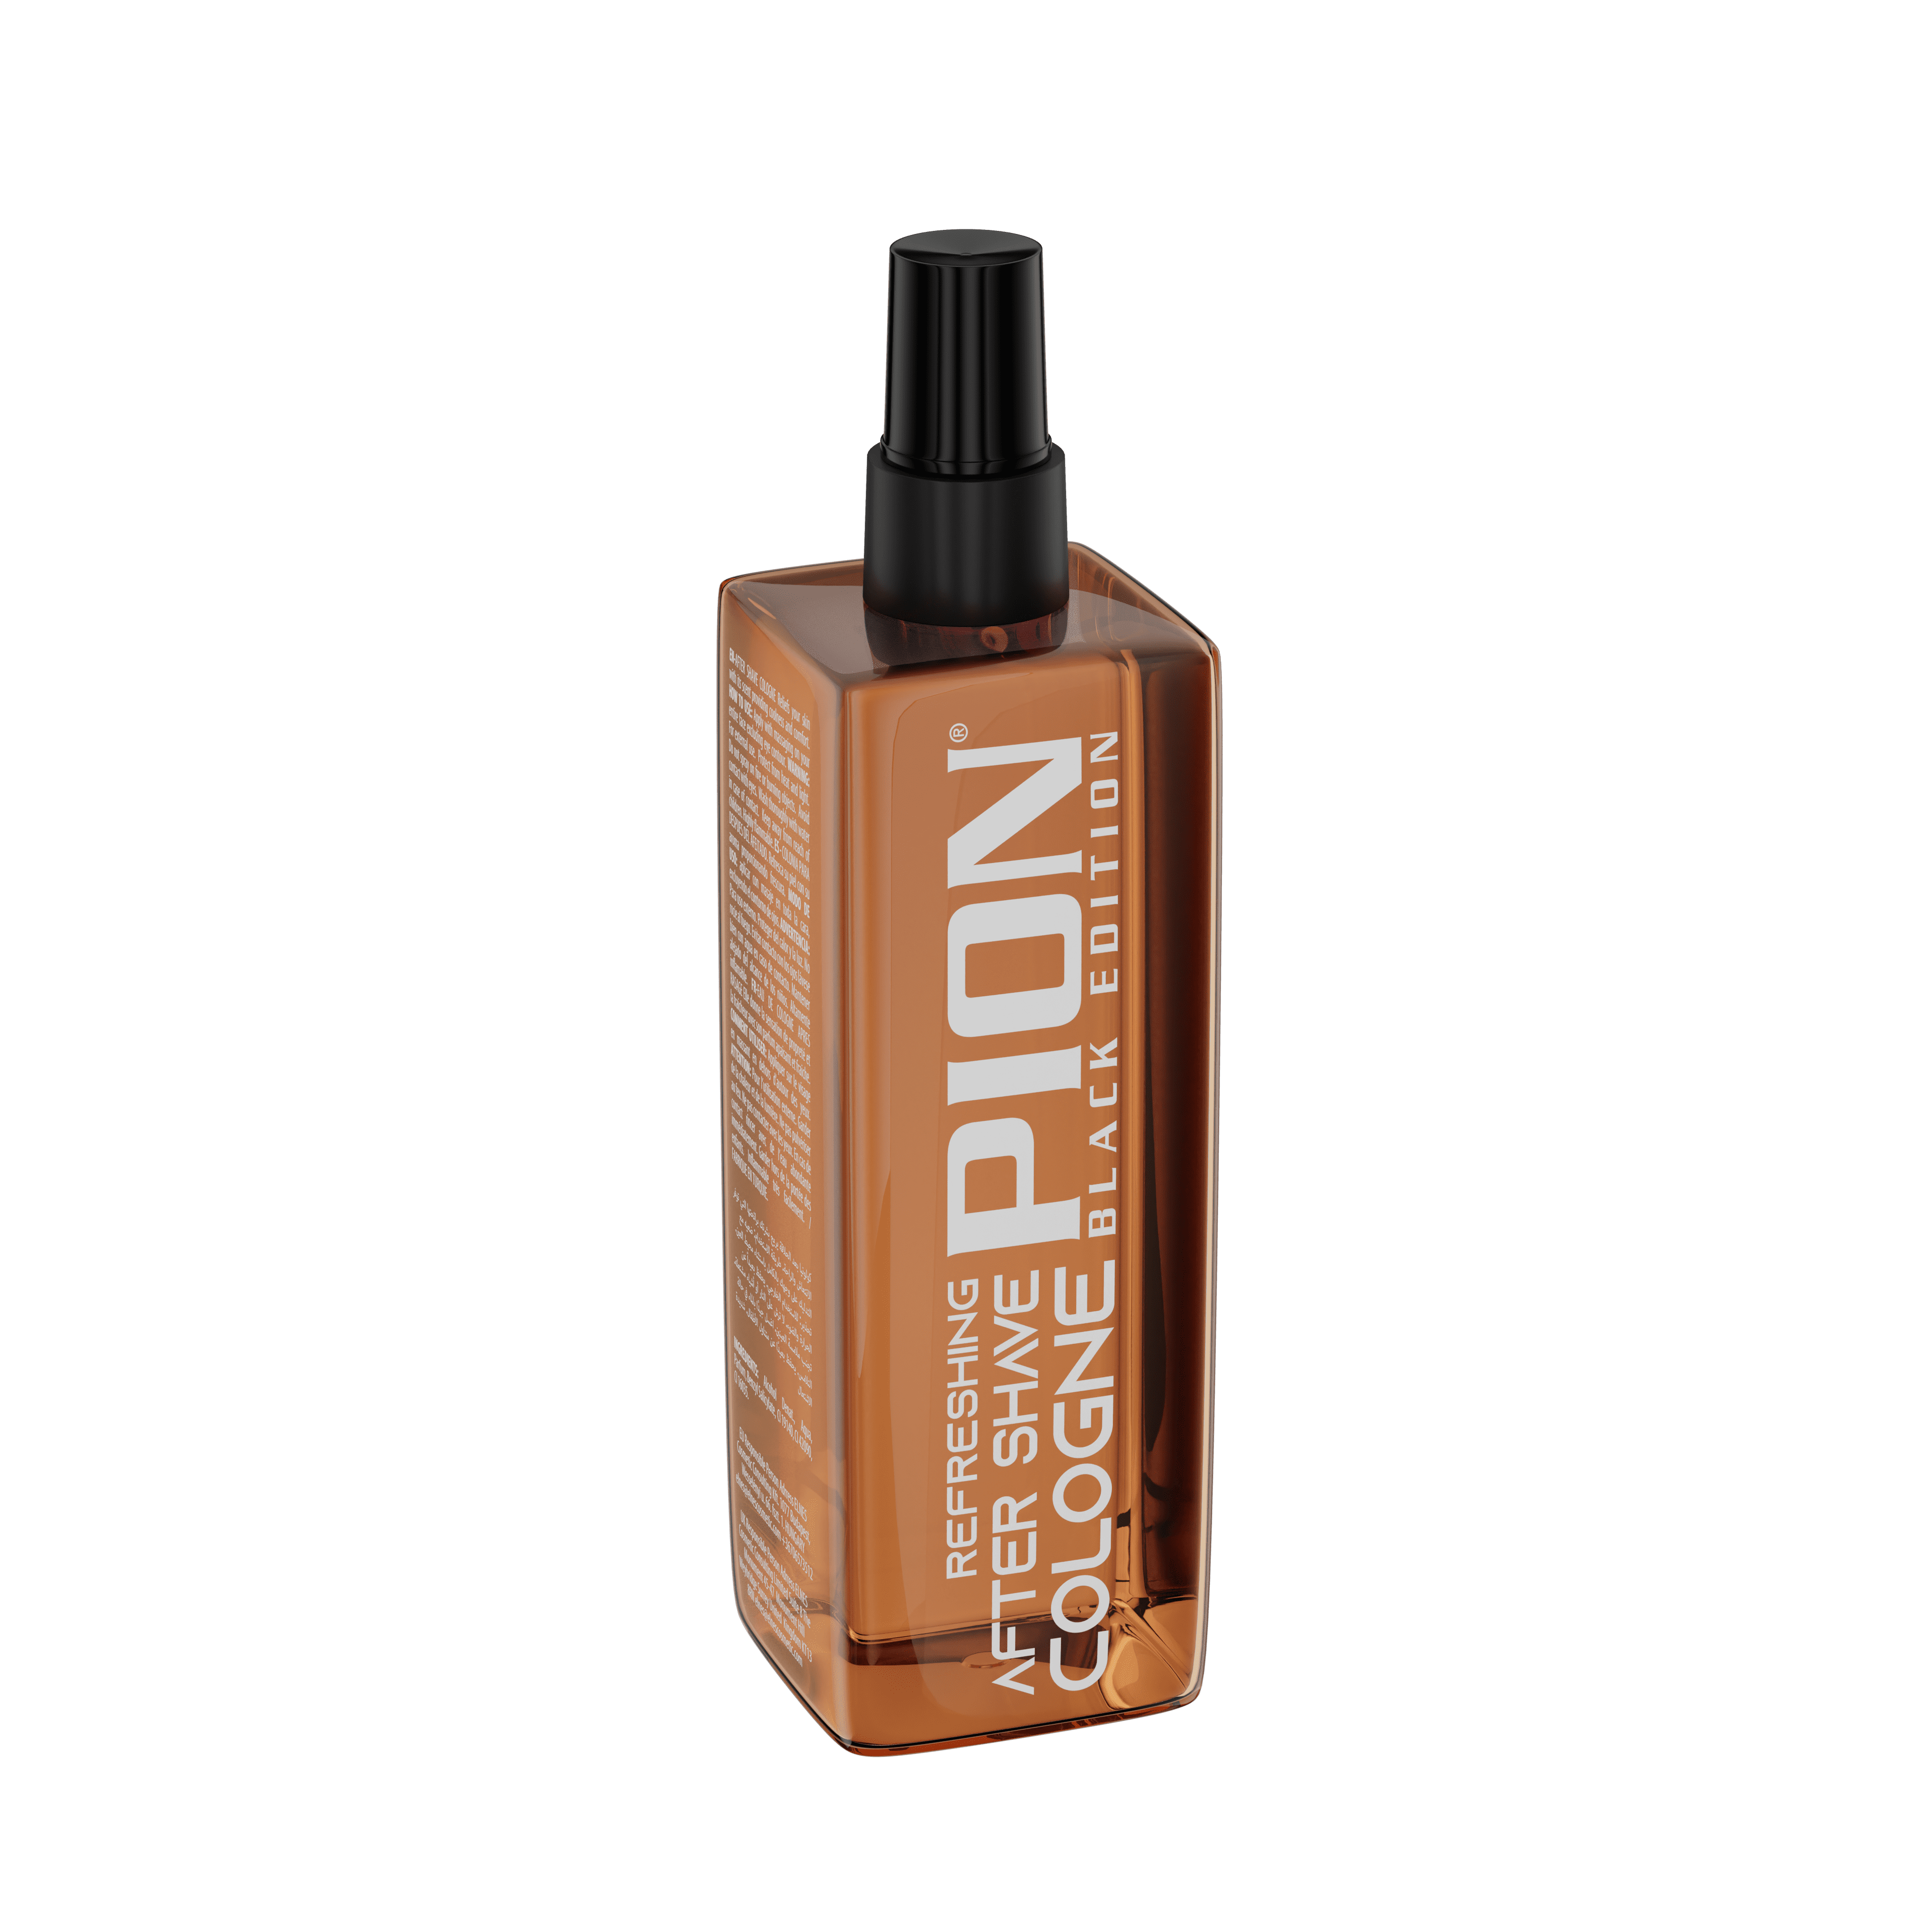 Pion Cologne Amber 370ml - PION BLACK EDITION